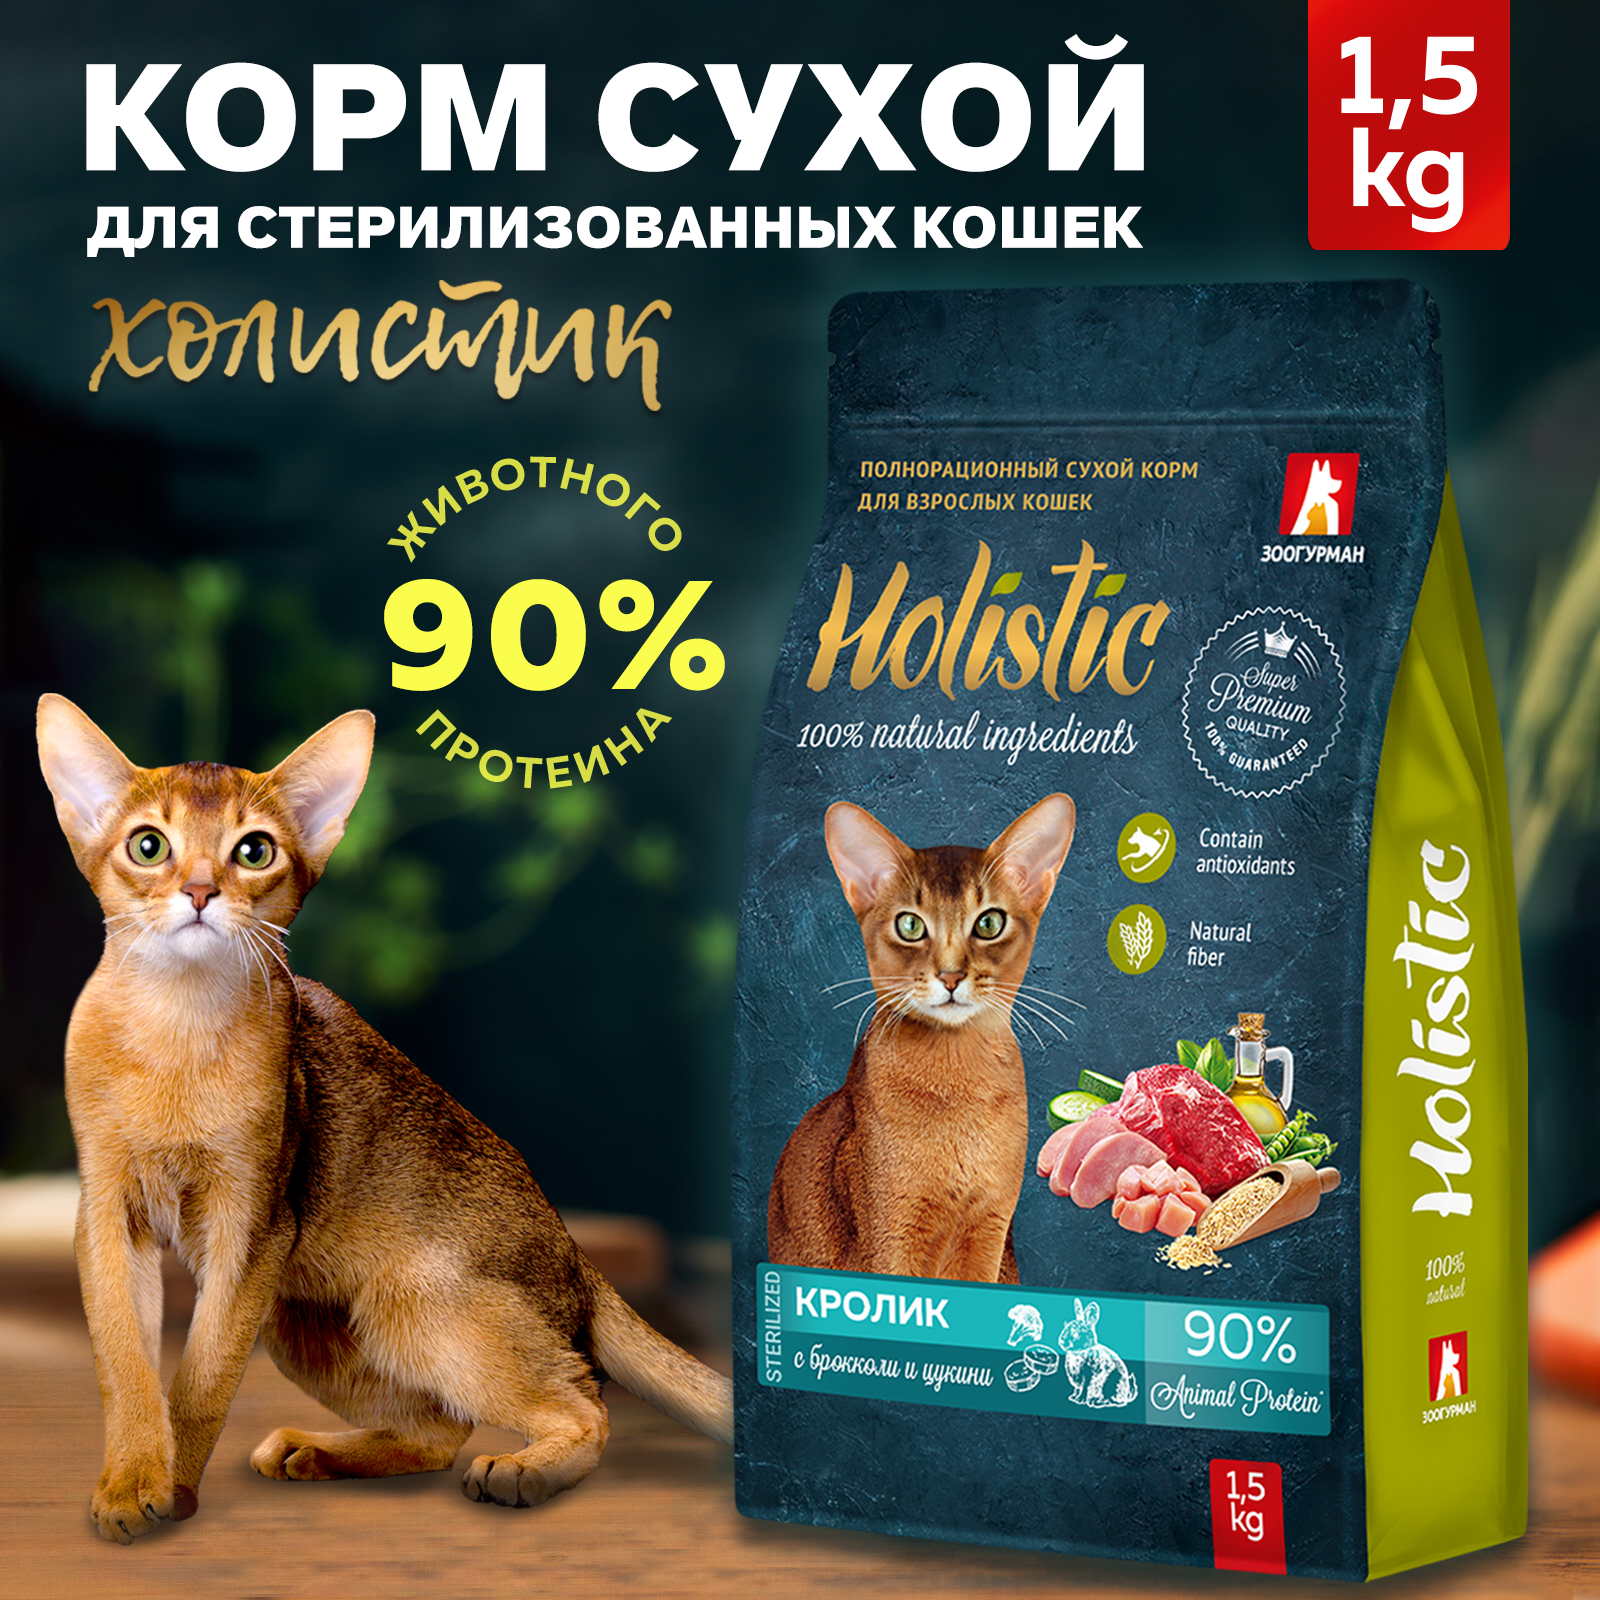 Сухой корм для кошек Зоогурман Holistic полнорационный, кролик, брокколи, цукини, 1,5 кг